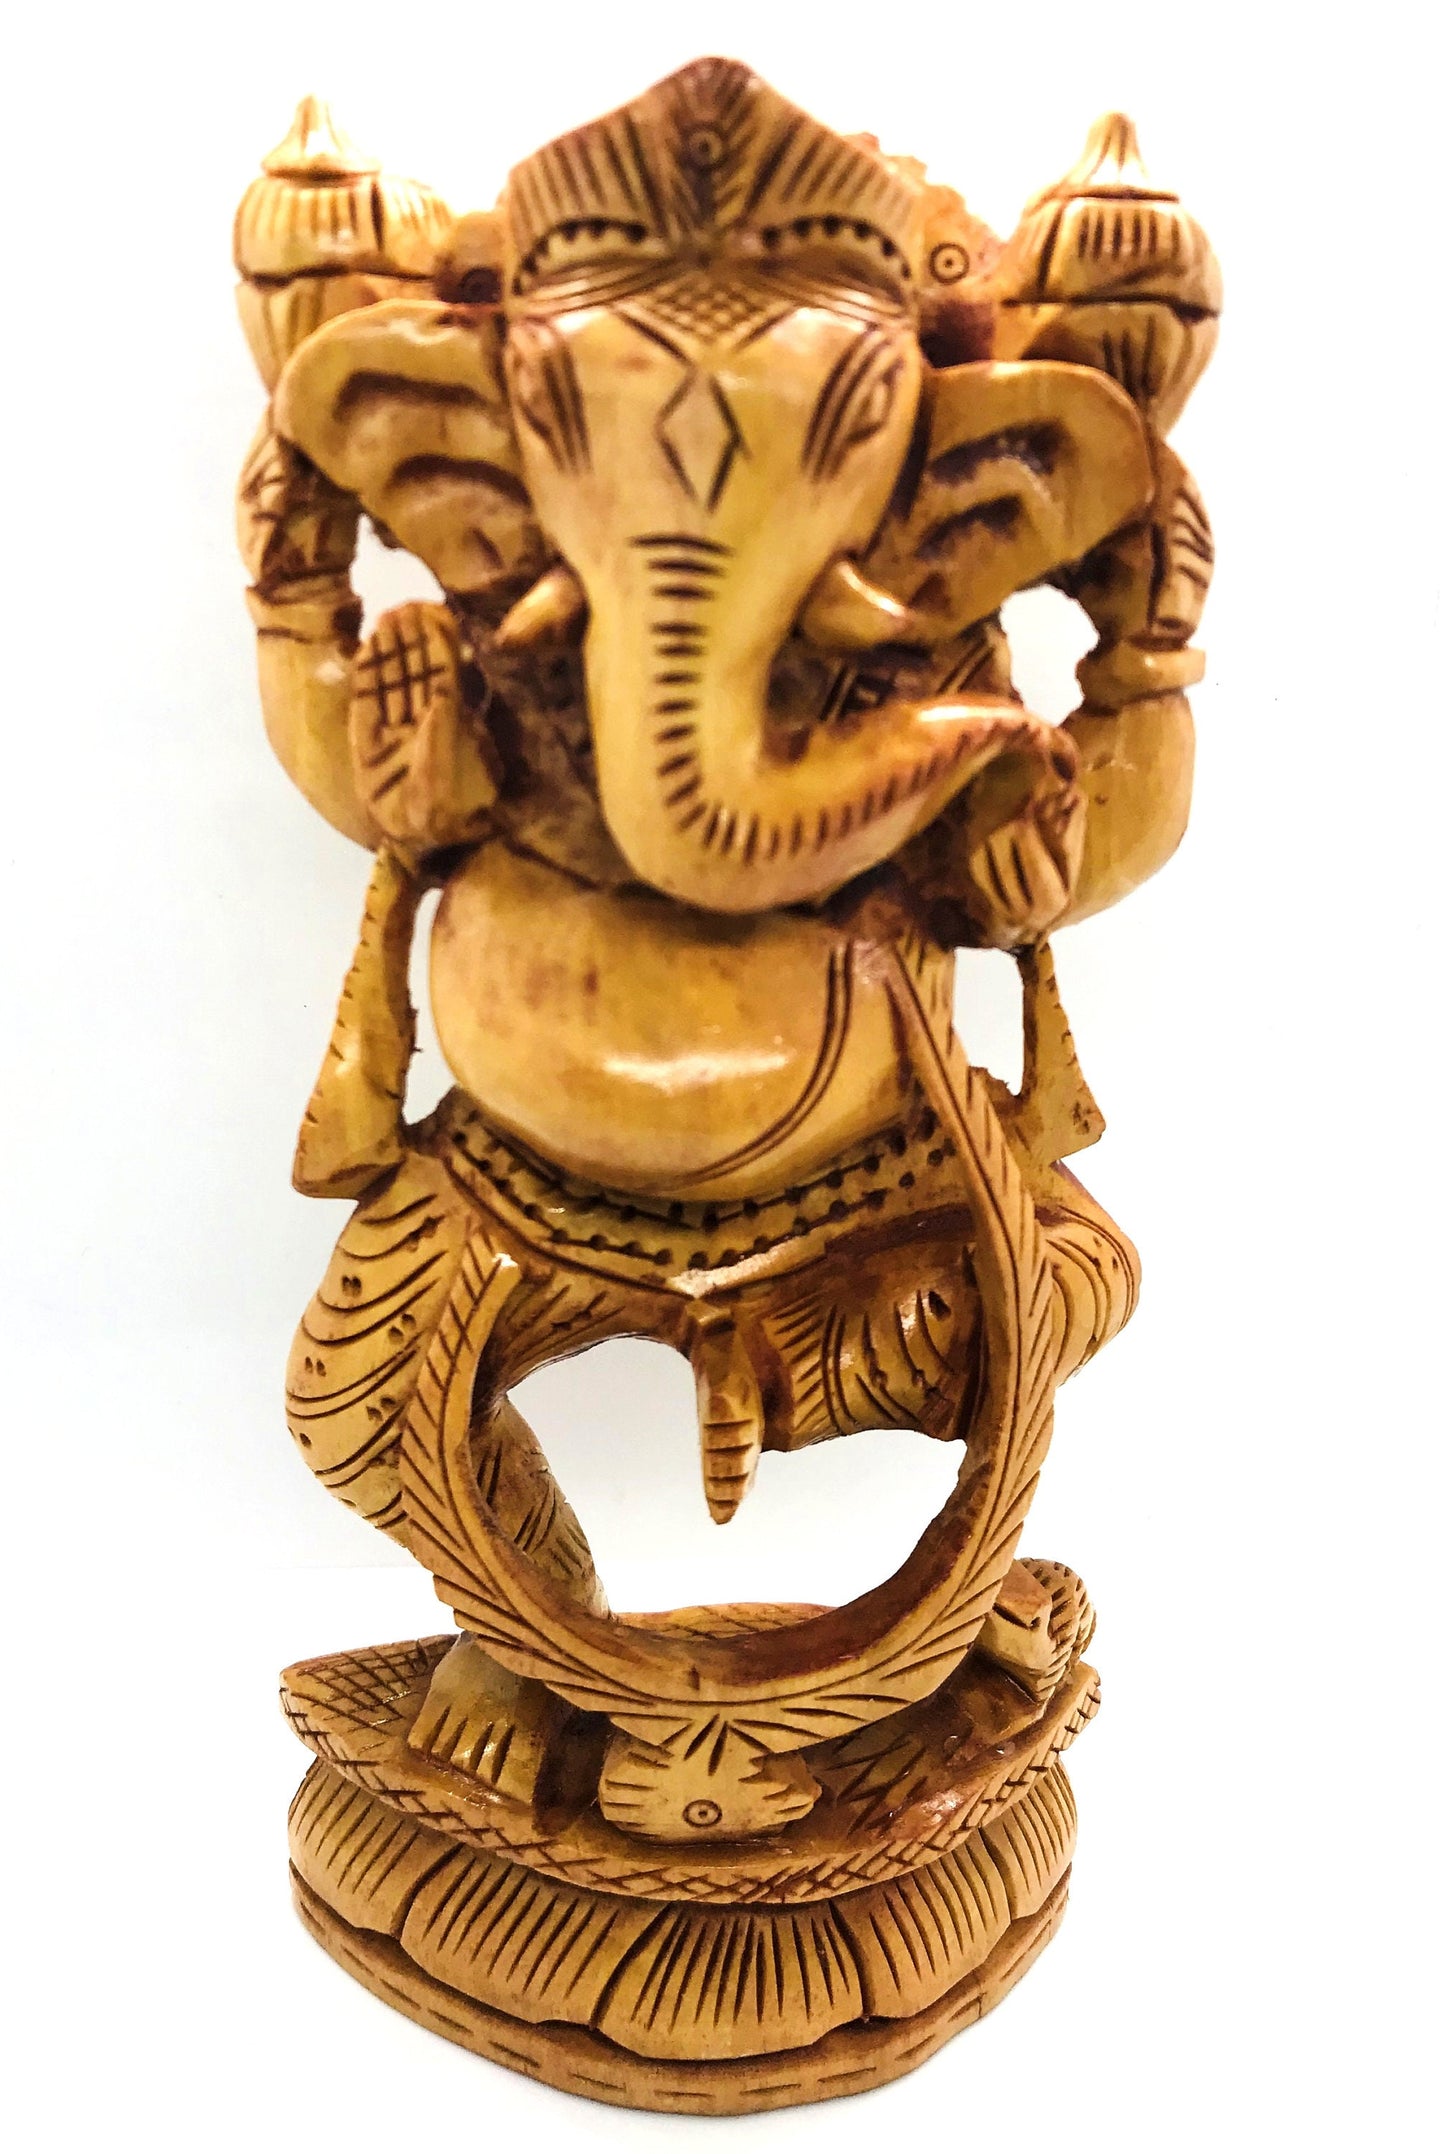 GANESHA Statue - Ganesh wooden idol - GANPATI wooden hand carved 6 inches statue - Hindu Elephant God GANESH - good luck success prosperity